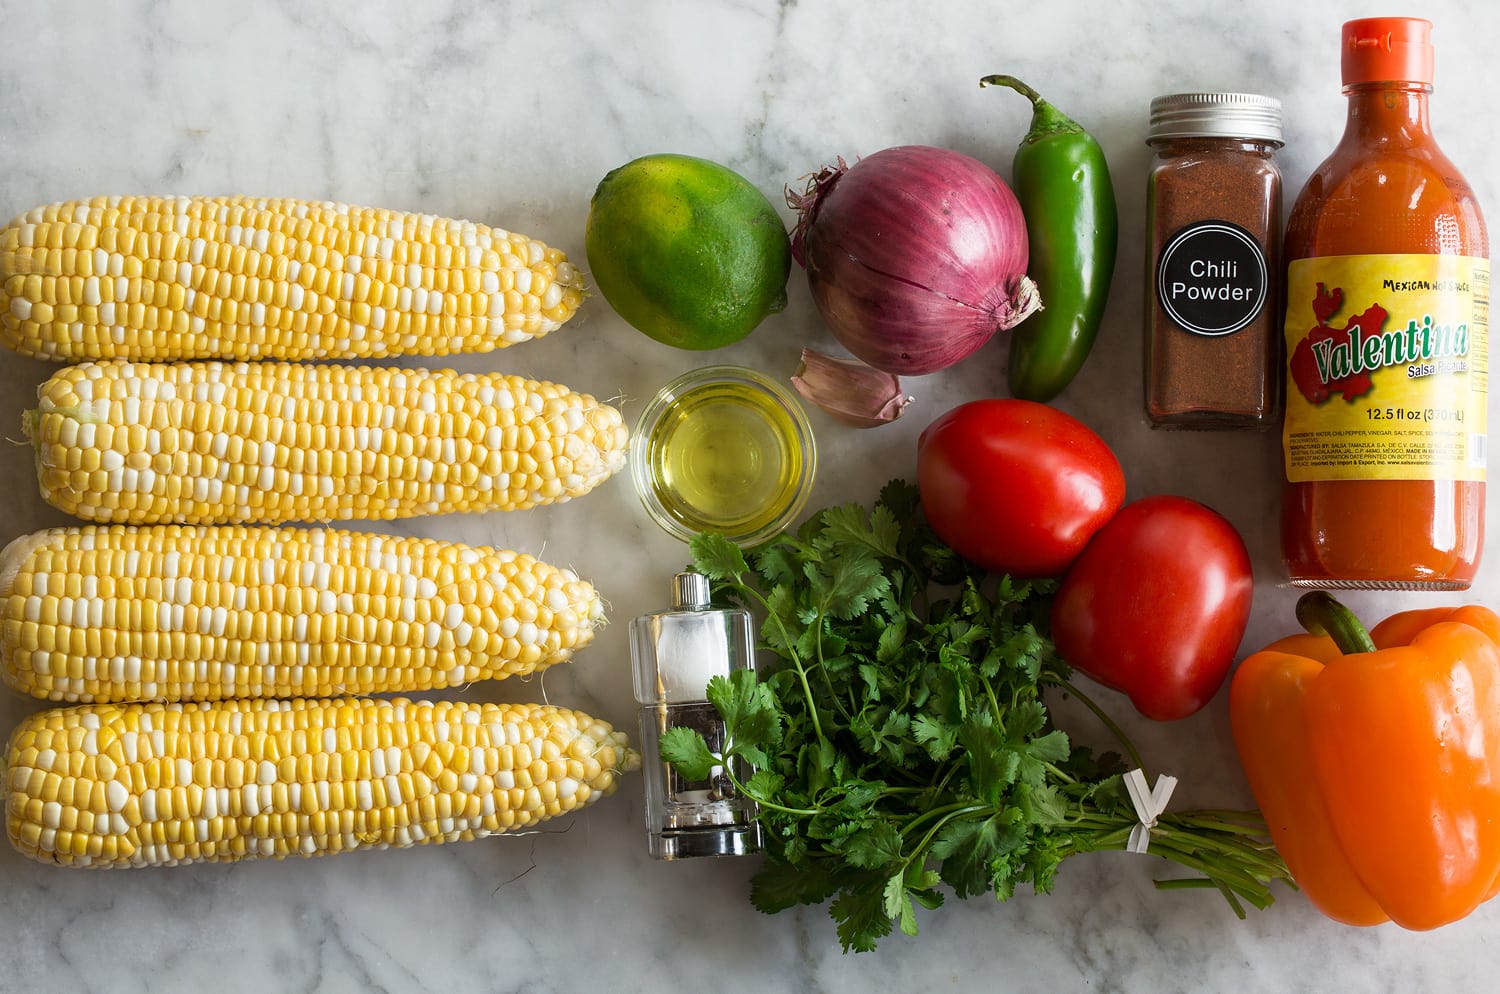 Ingredients needed to make corn salsa shown.